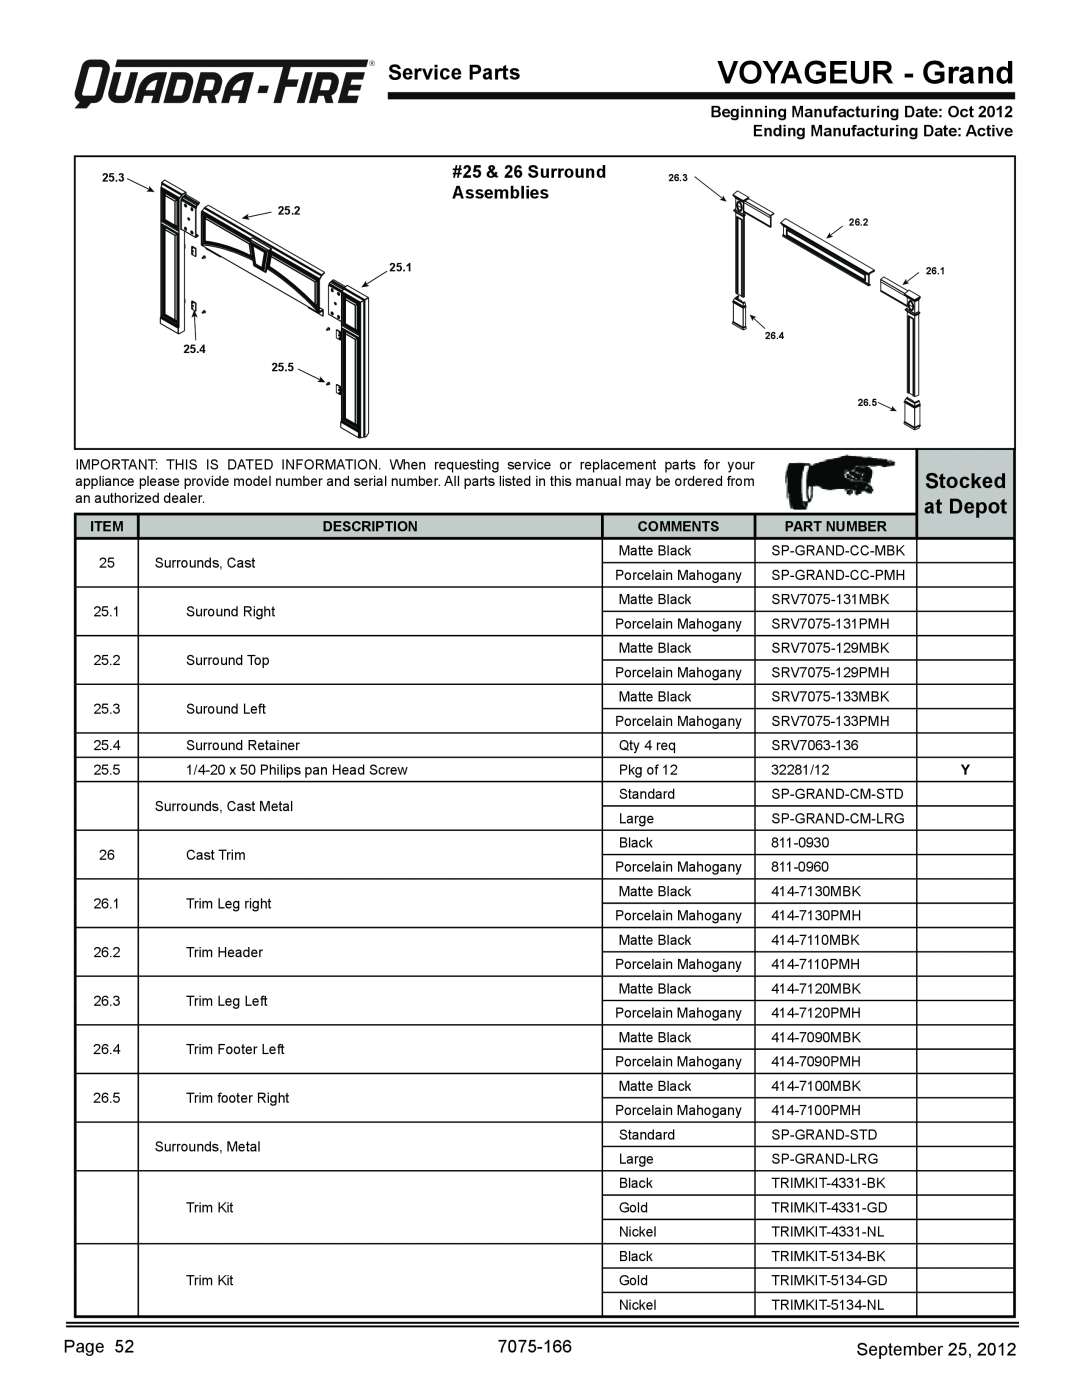 Radware VOYA-GRAND-MBK VOYAGEUR - Grand, R Service Parts, Stocked, at Depot, #25 & 26 Surround, Assemblies, Description 